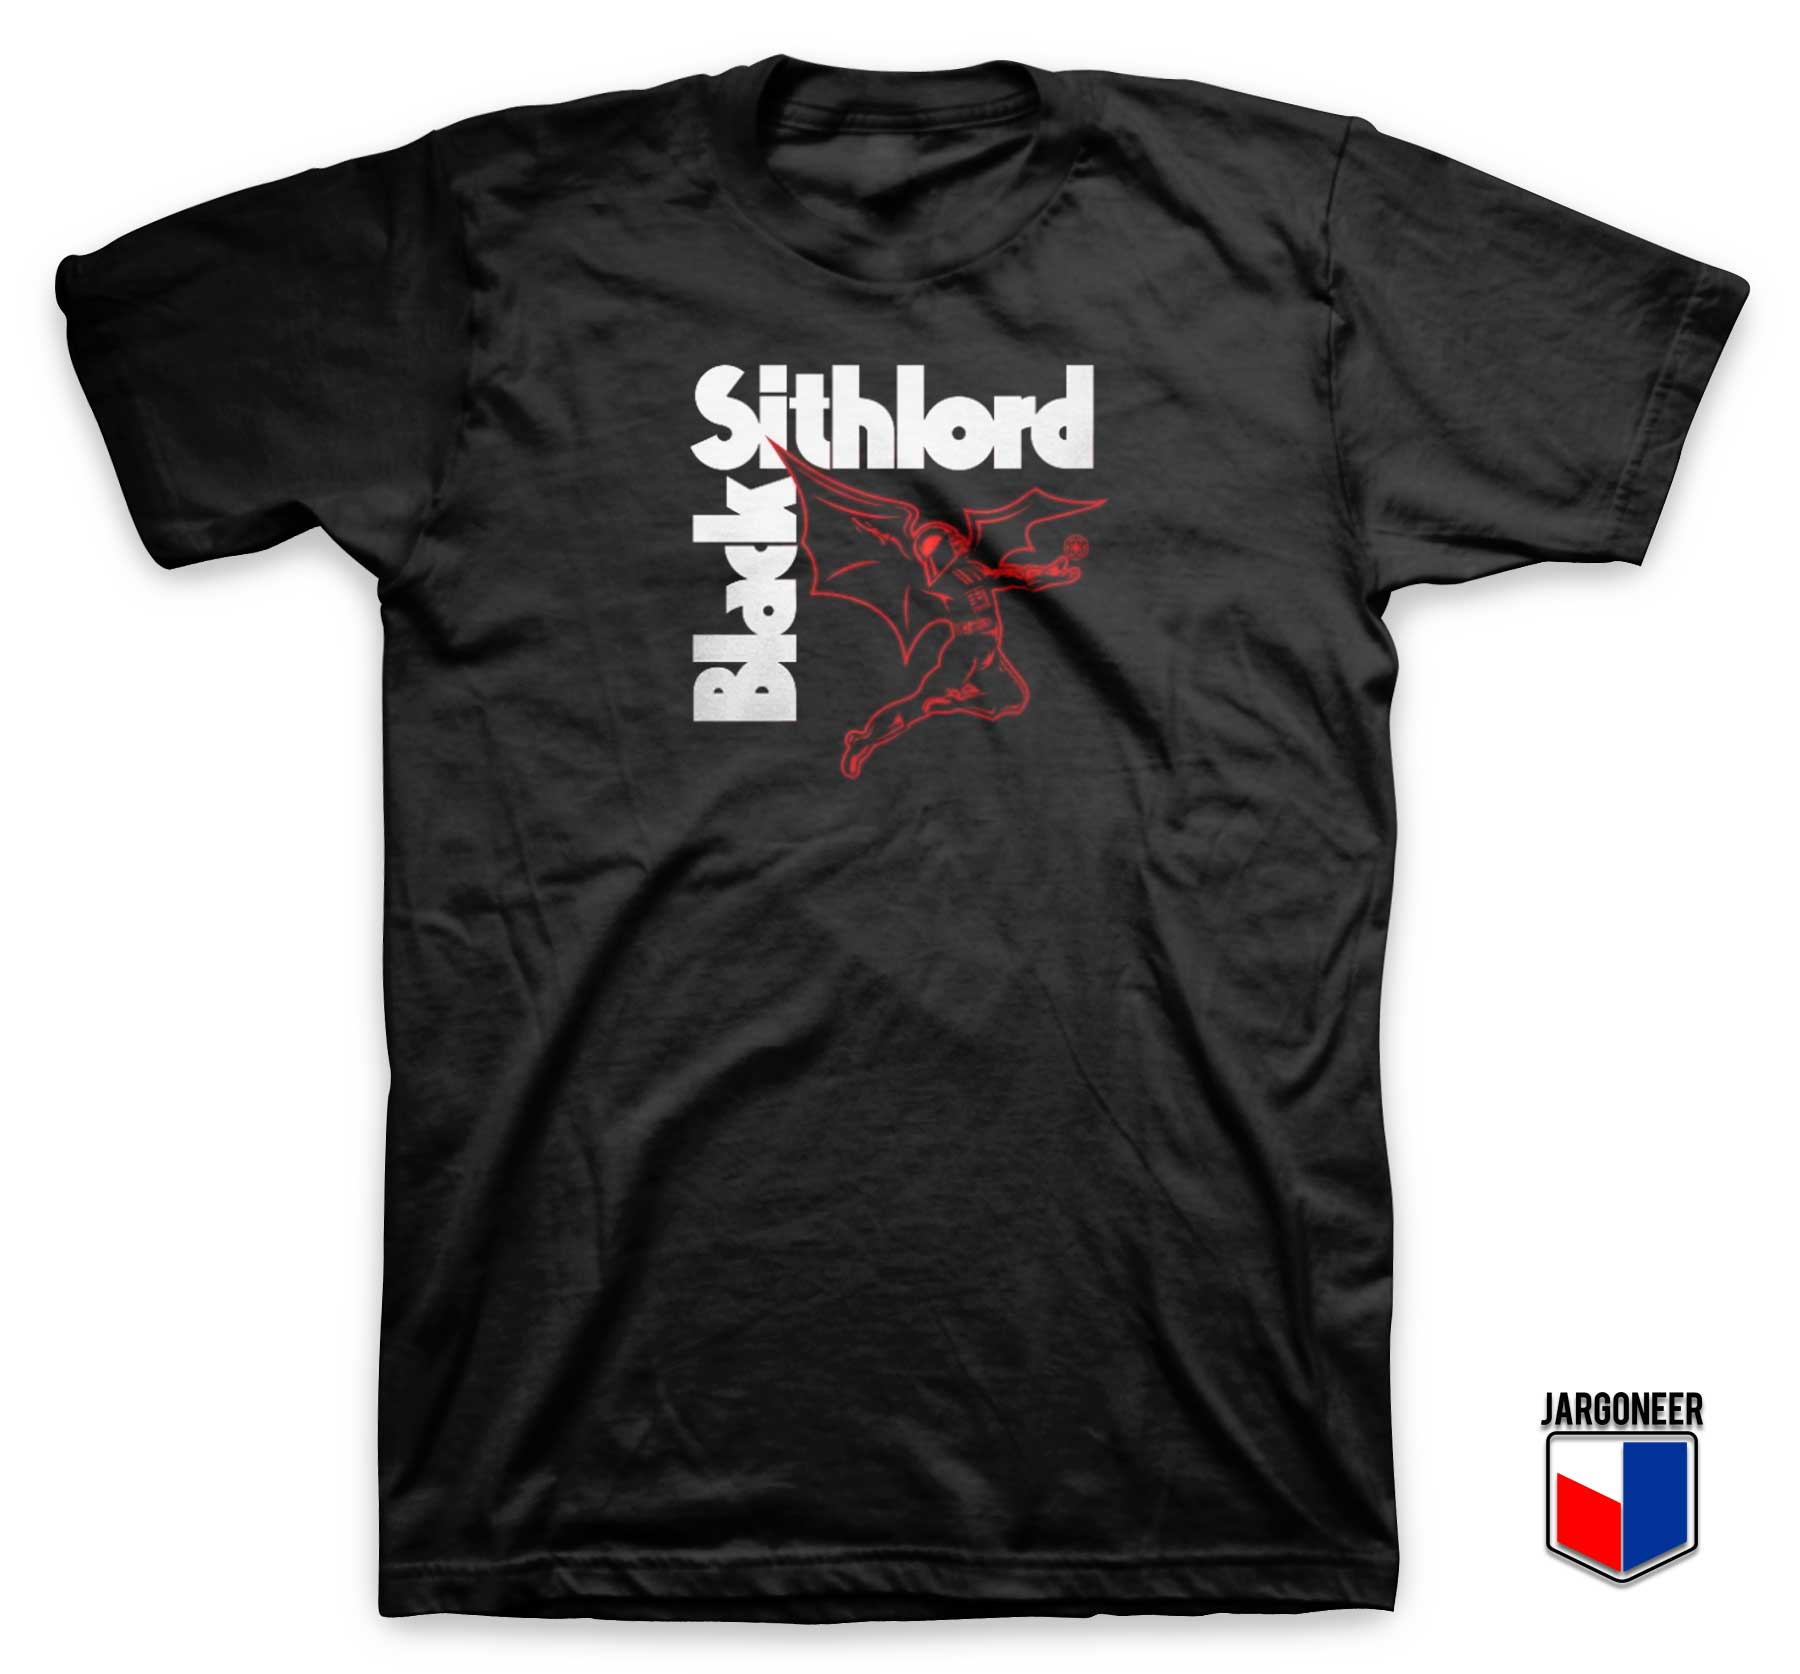 Black Sithlord Vader T Shirt - Shop Unique Graphic Cool Shirt Designs